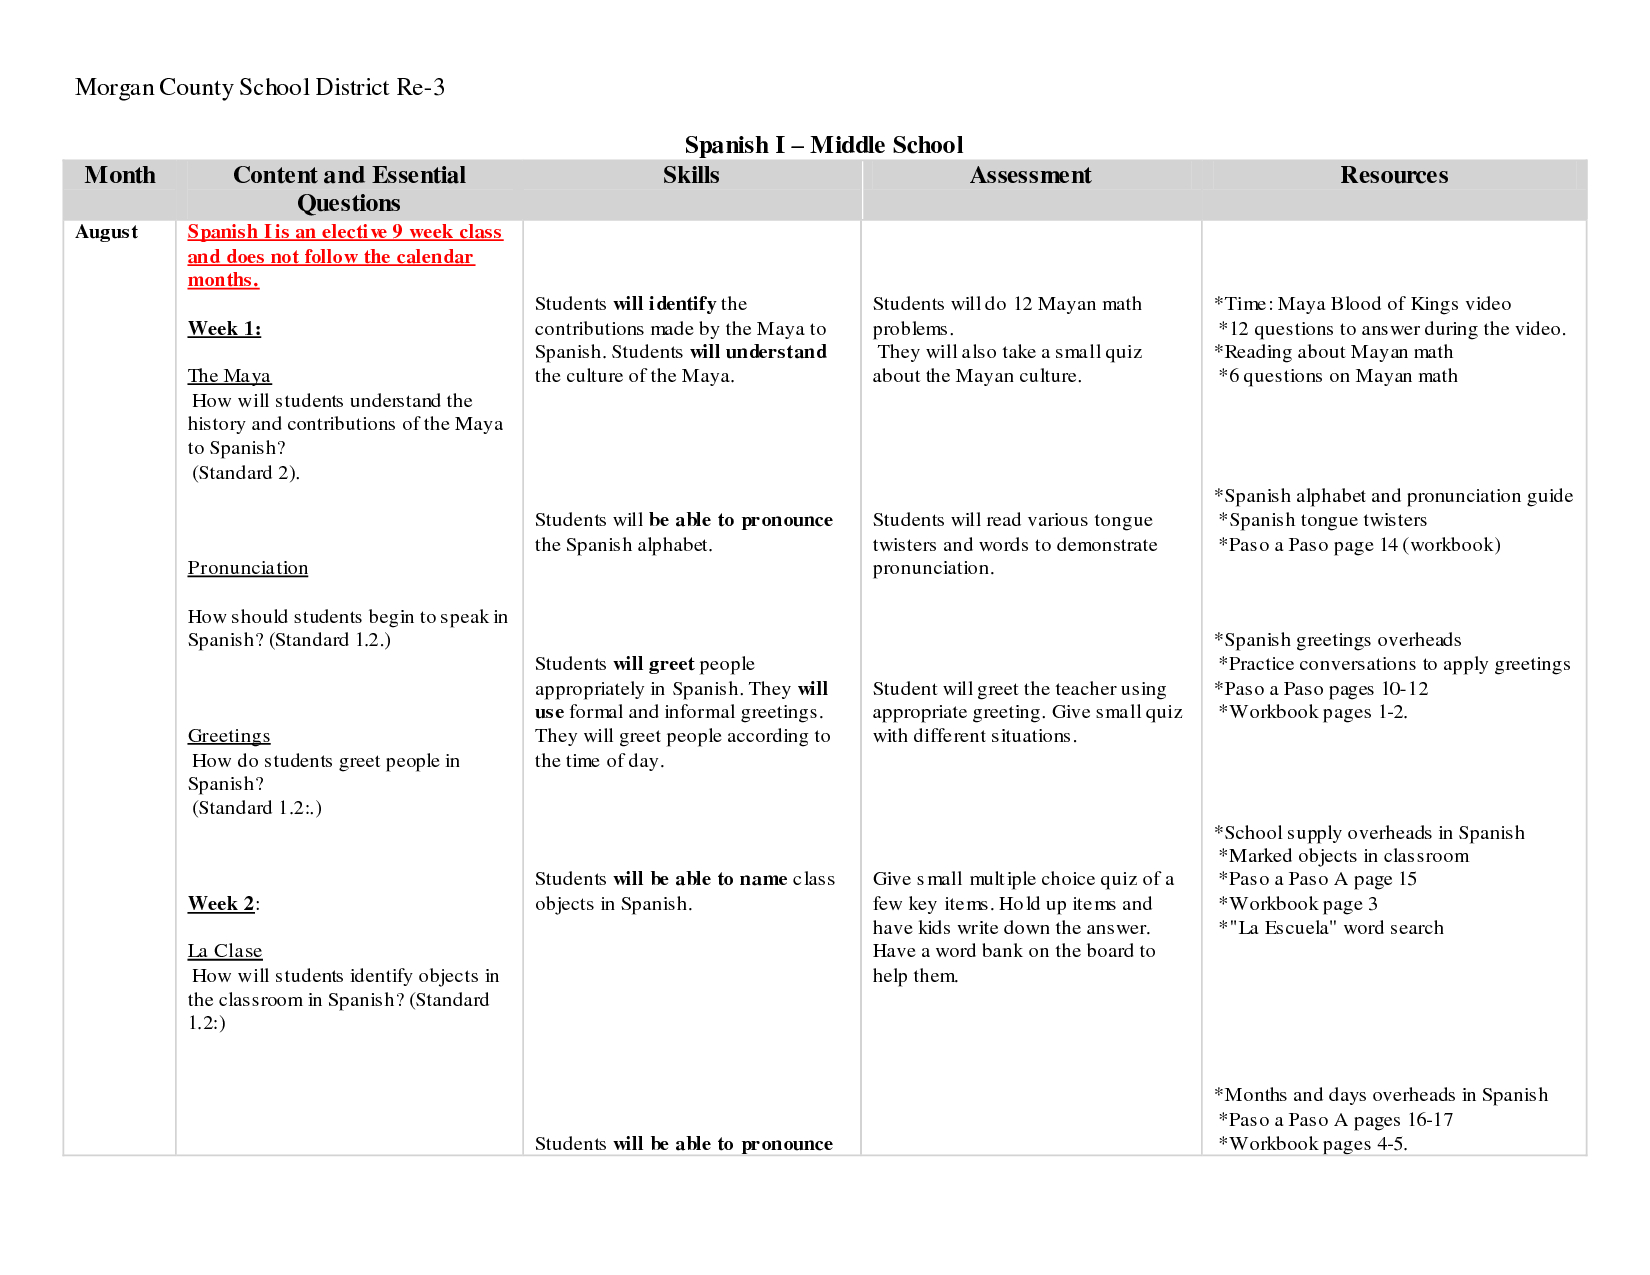 Worksheet : Learn Spanish Worksheets Learning Kindergart - Free Printable Spanish Worksheets